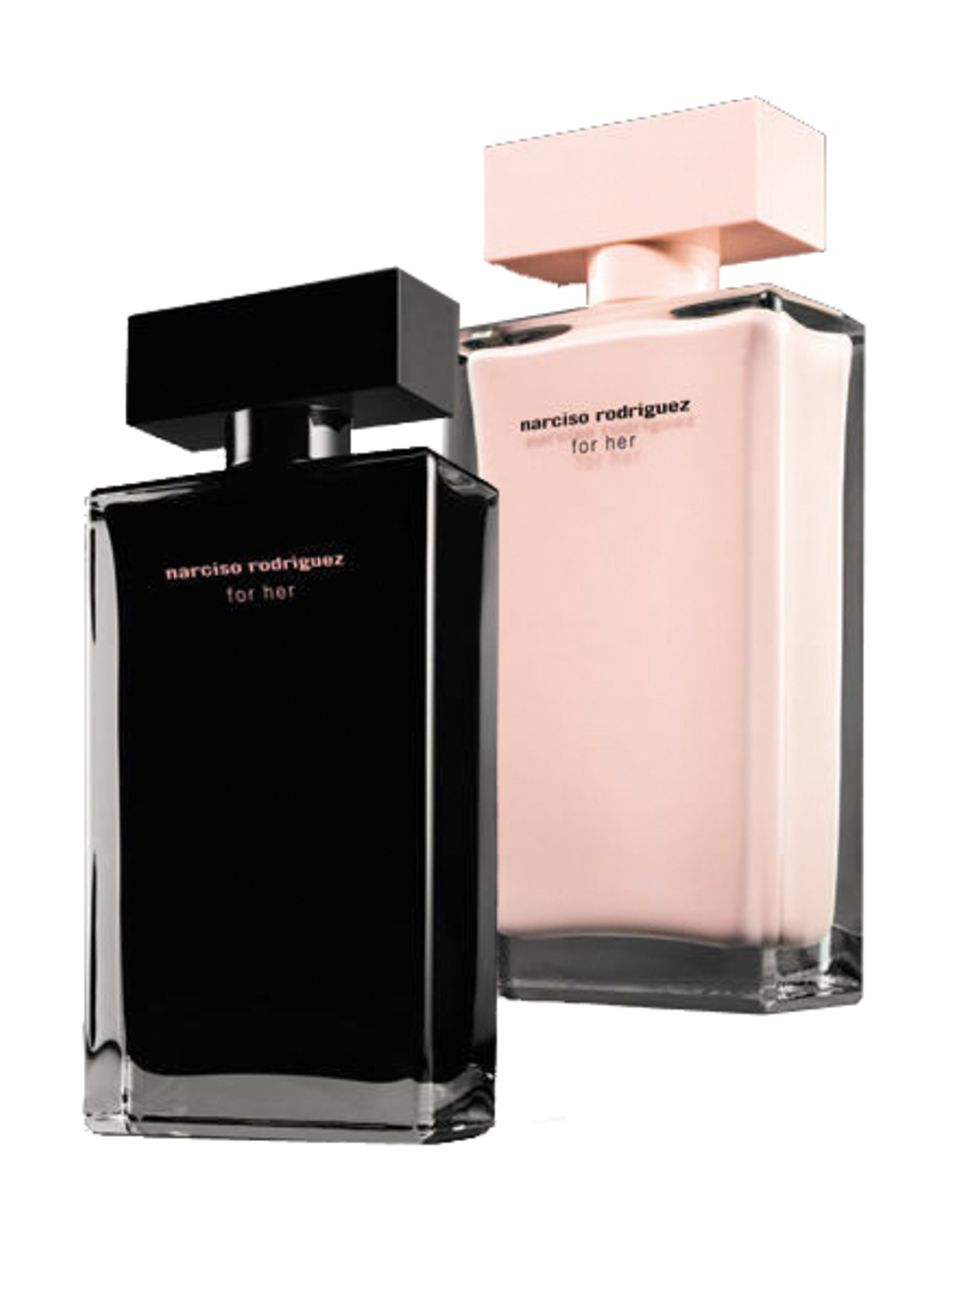 "For Her Eau de Parfum" im roséfarbenen Flakon, 50 ml, ca. 77 Euro, "For Her
 Eau de Toilette" im schwarzen Flakon, 50 ml, 66 Eur